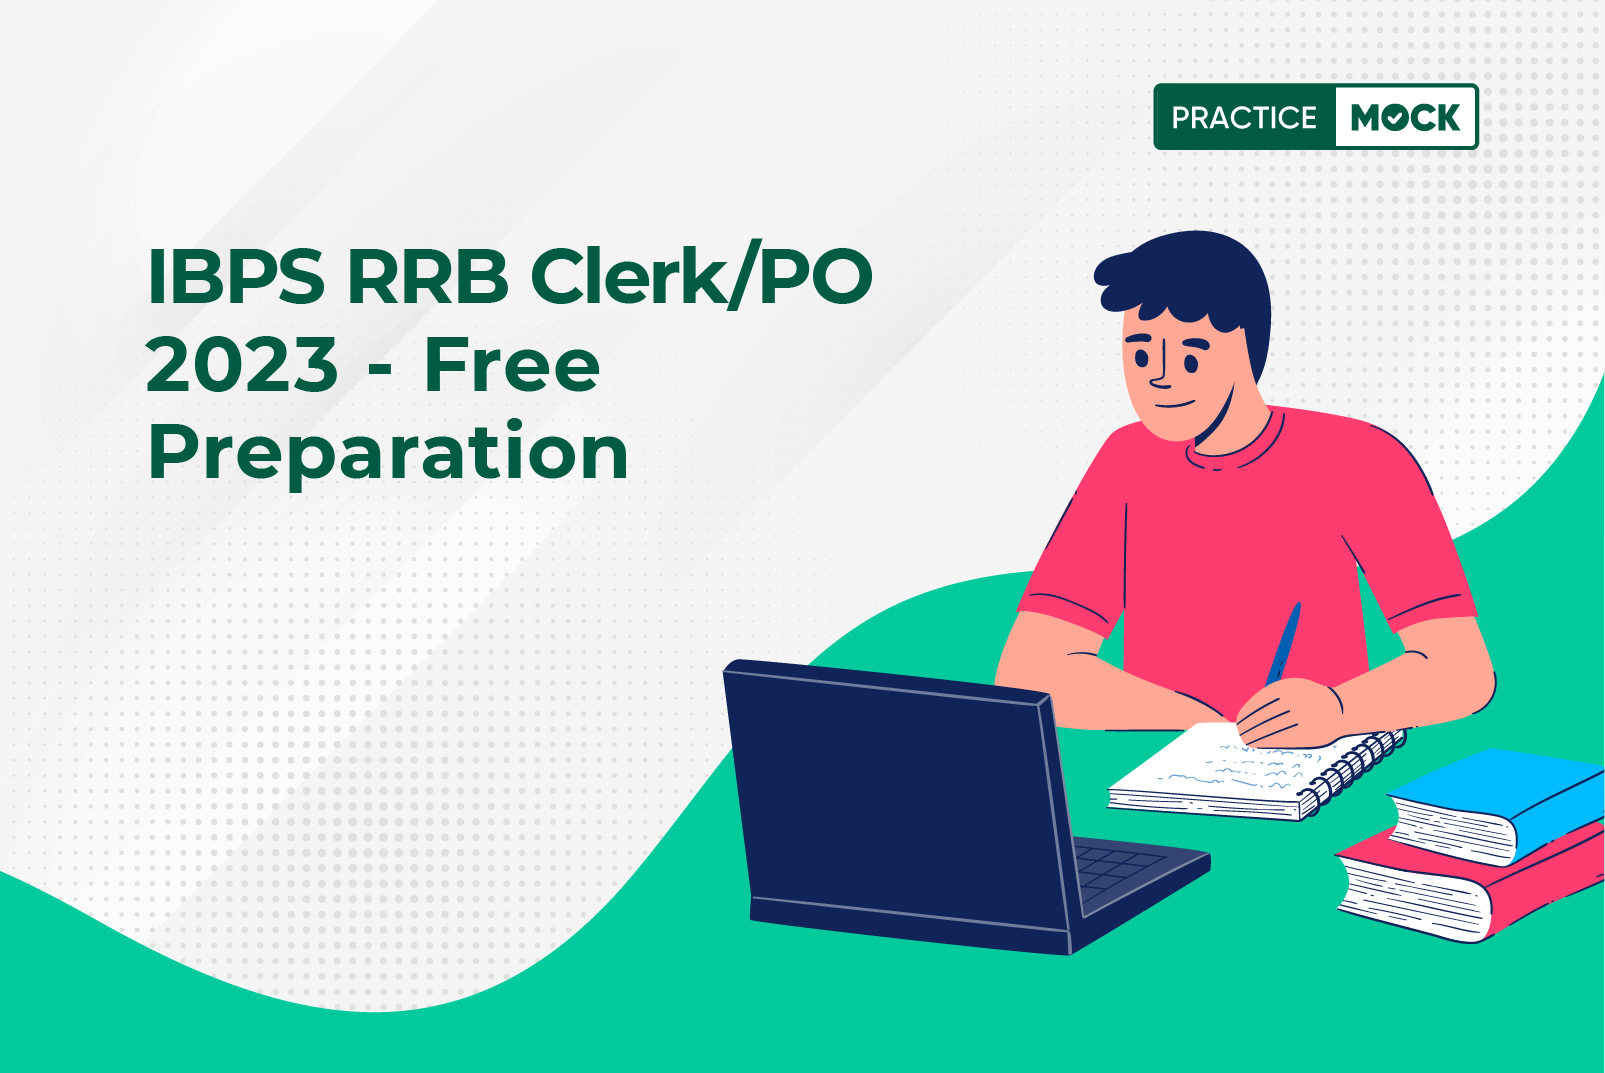 IBPS RRB Clerk/PO 2023 - Prepare FREE!